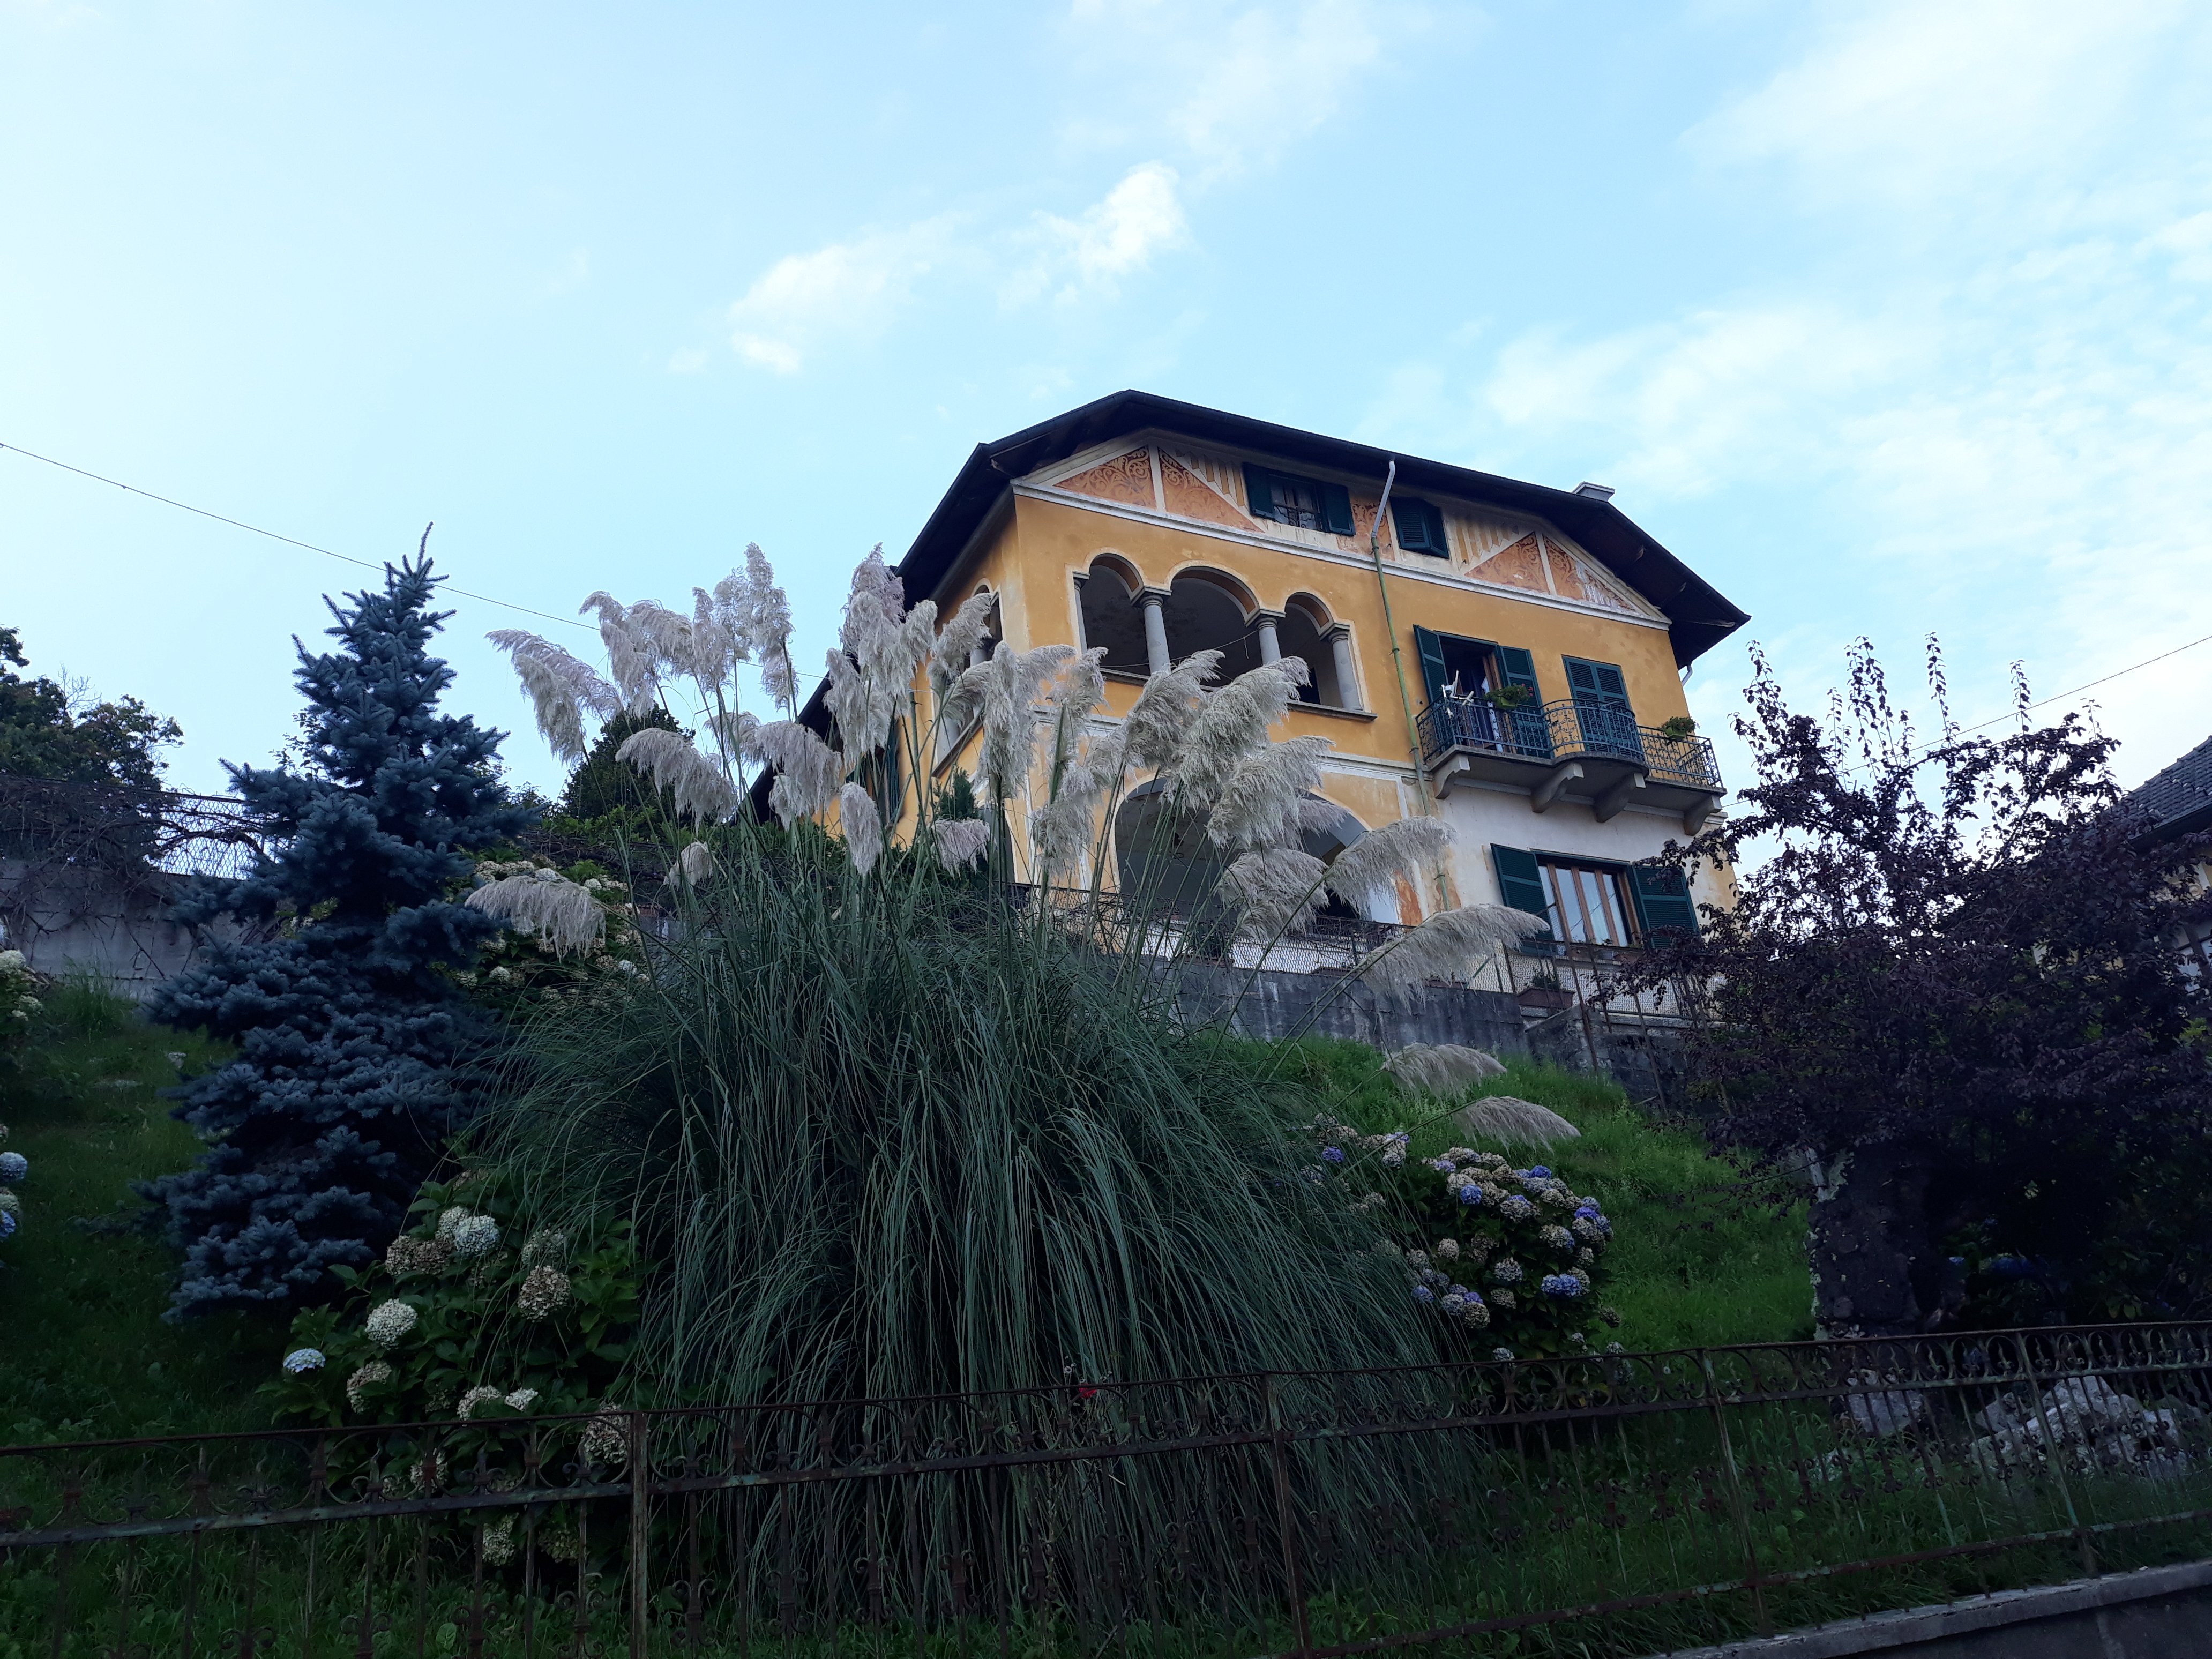  Quarna Sopr, Villa Pertini, túratársat keresek